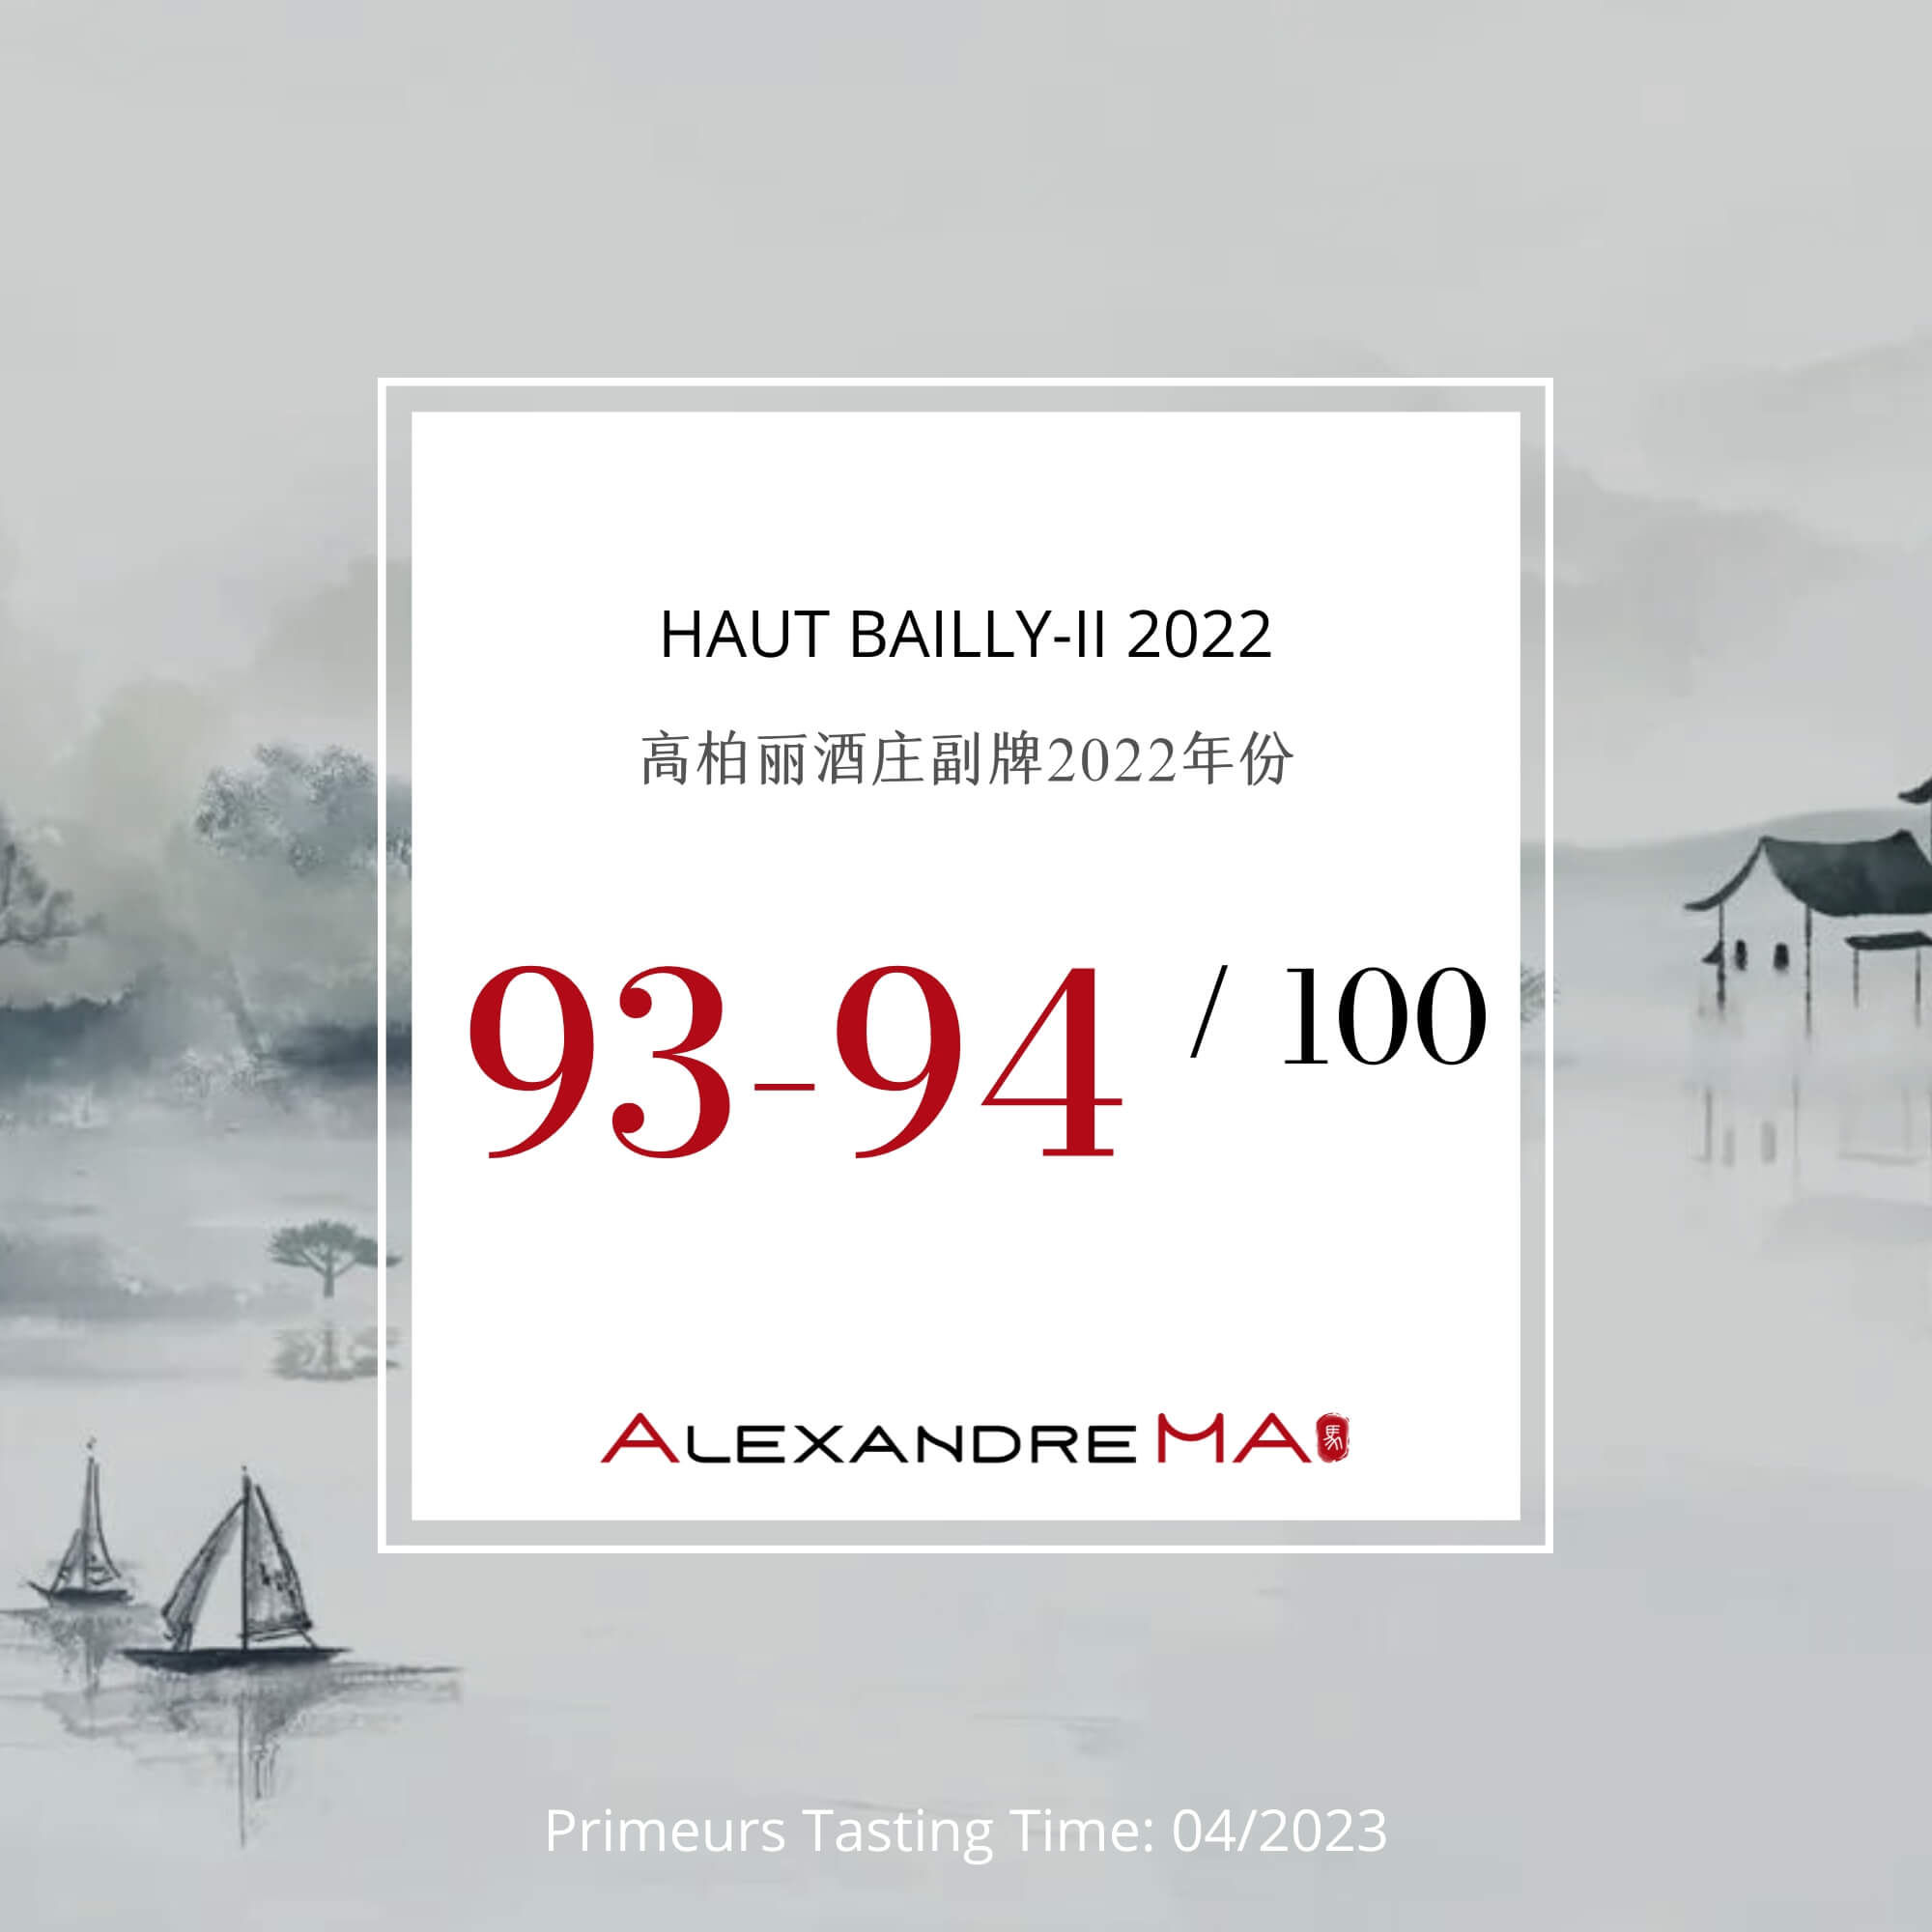 Haut Bailly-II 2022 Primeurs - Alexandre MA